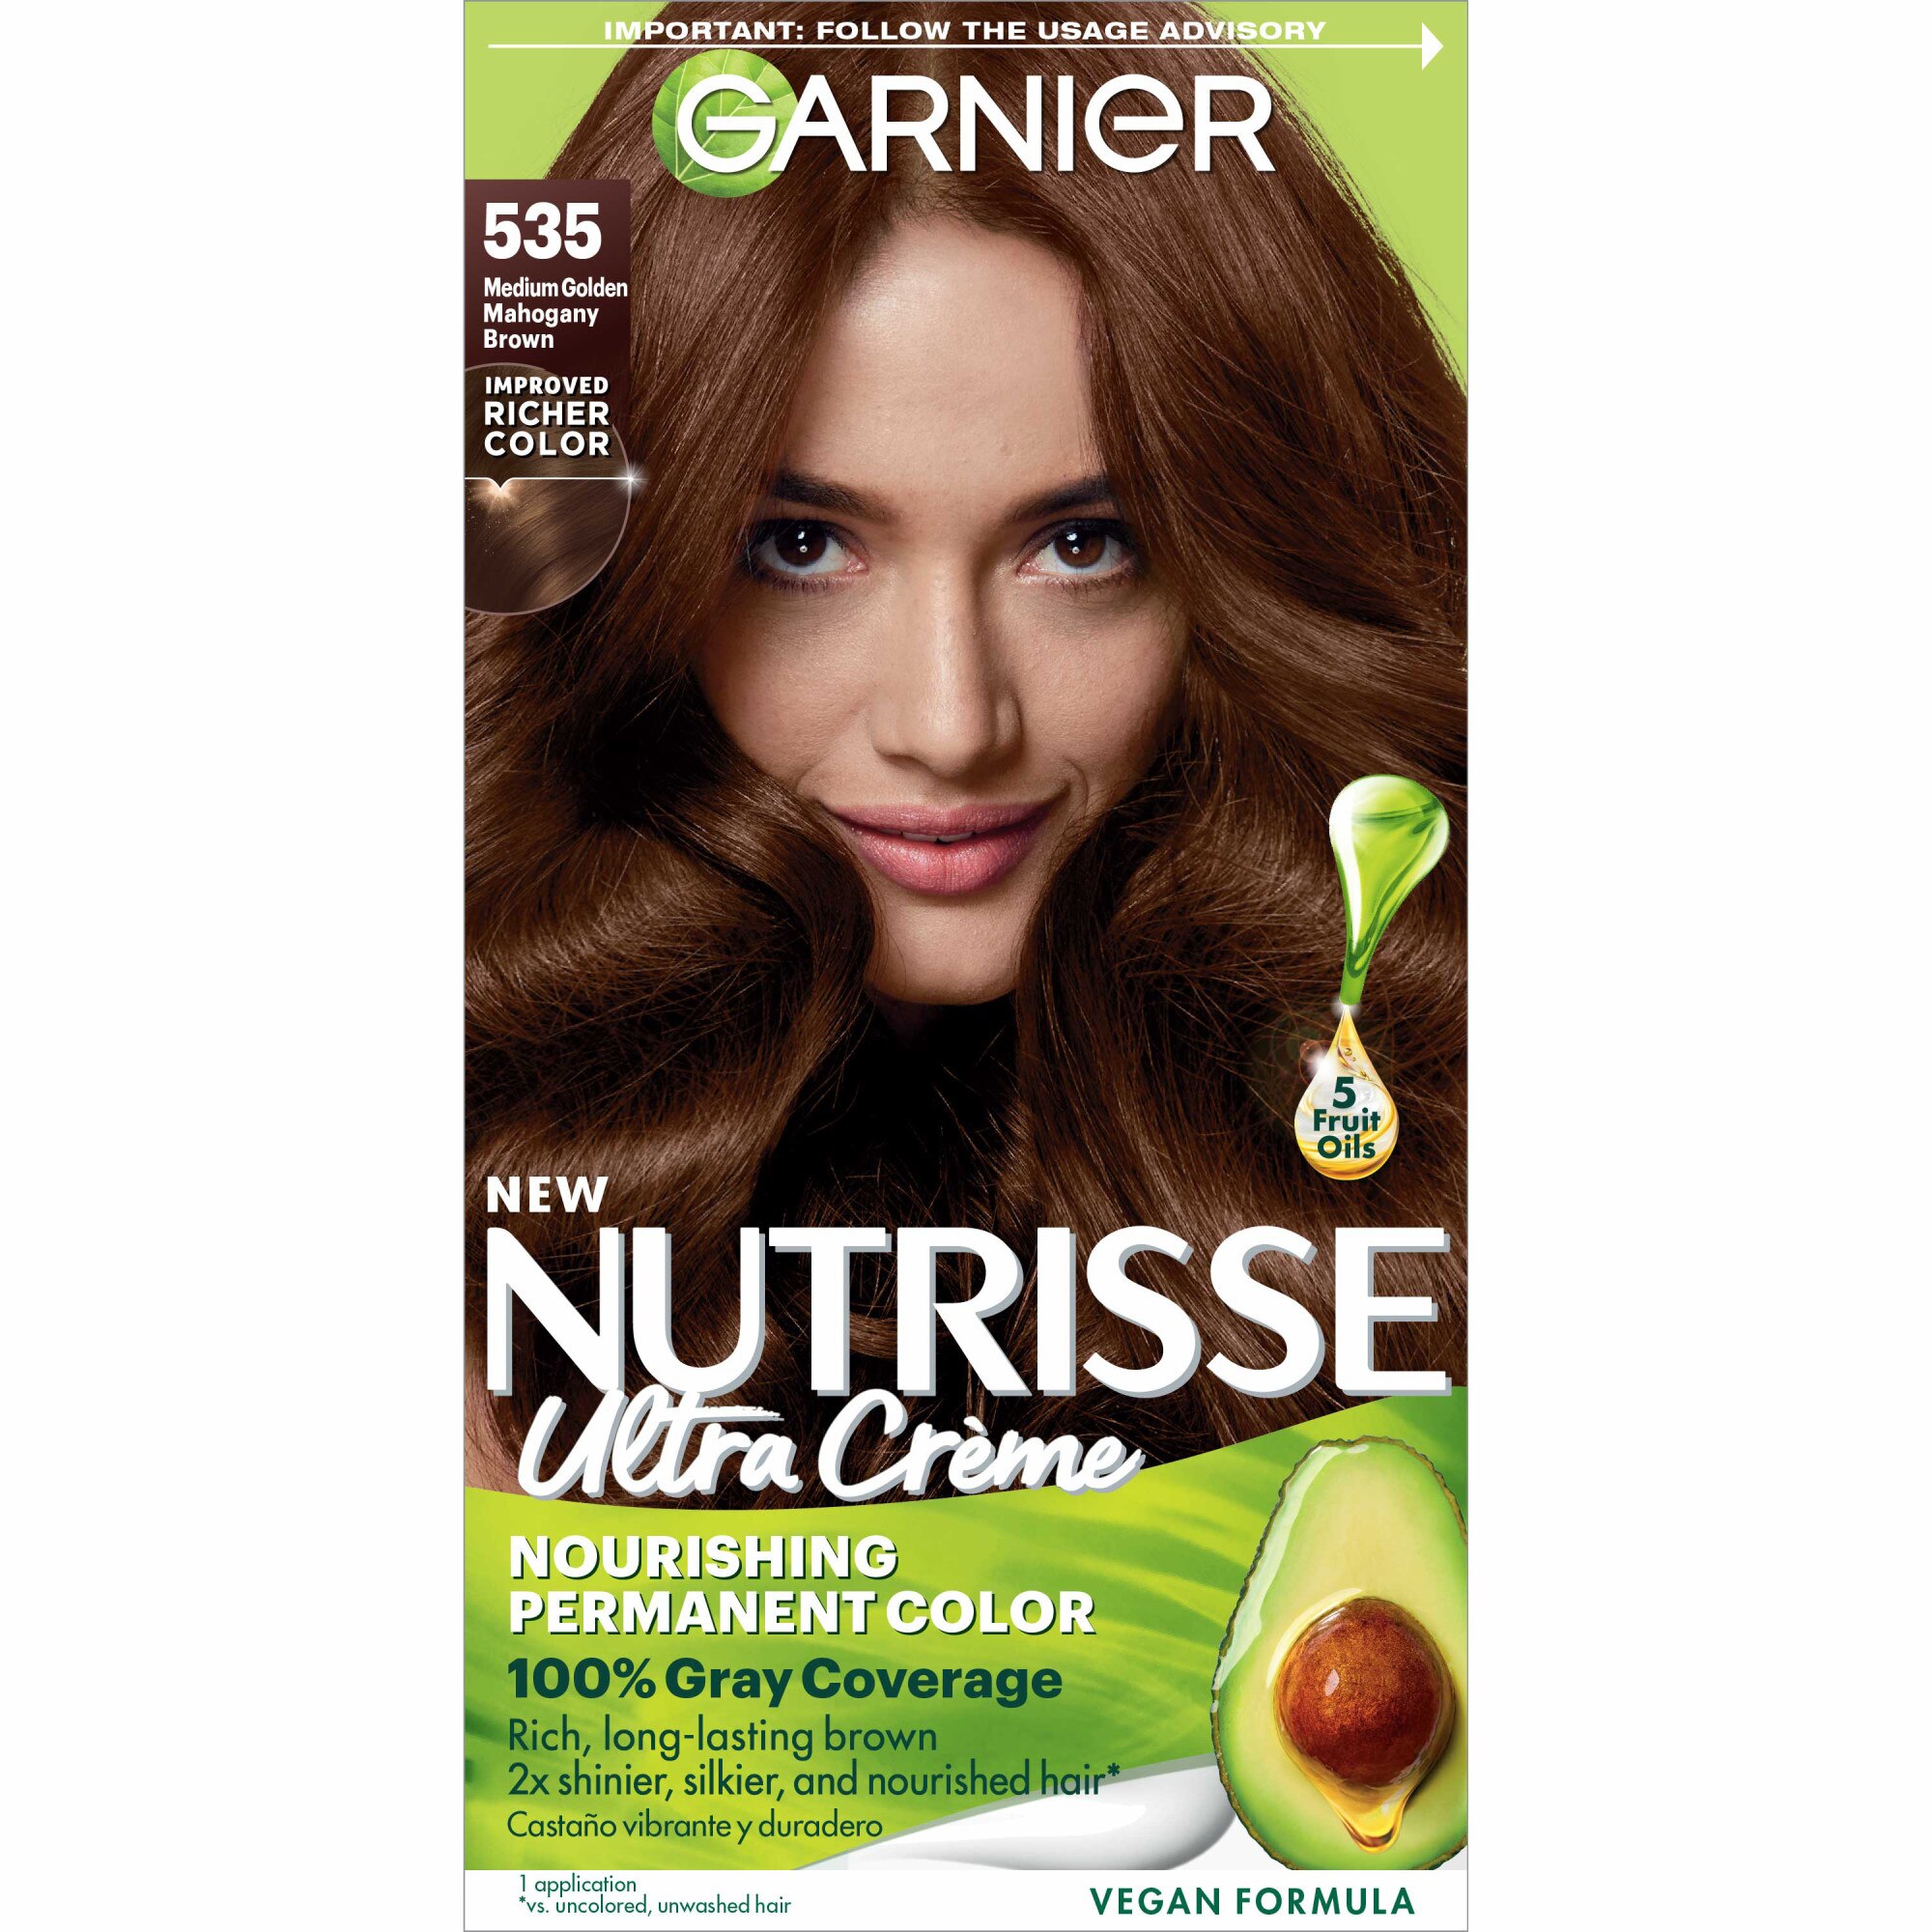 Garnier Nutrisse Nourishing Permanent Hair Color Creme, 535 Medium Gold Mahogany Brown , CVS